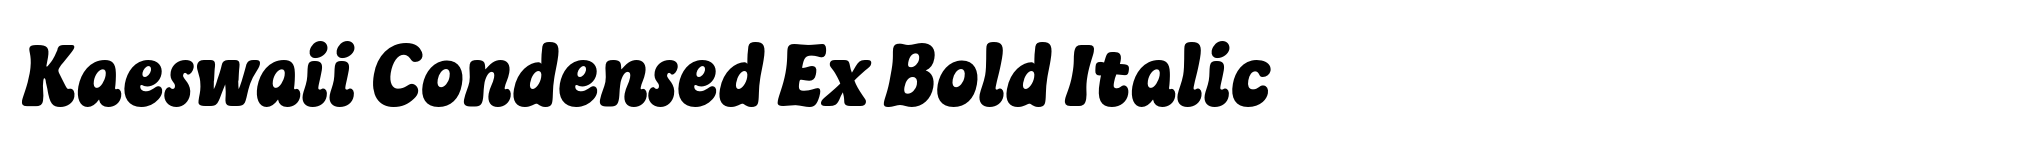 Kaeswaii Condensed Ex Bold Italic image